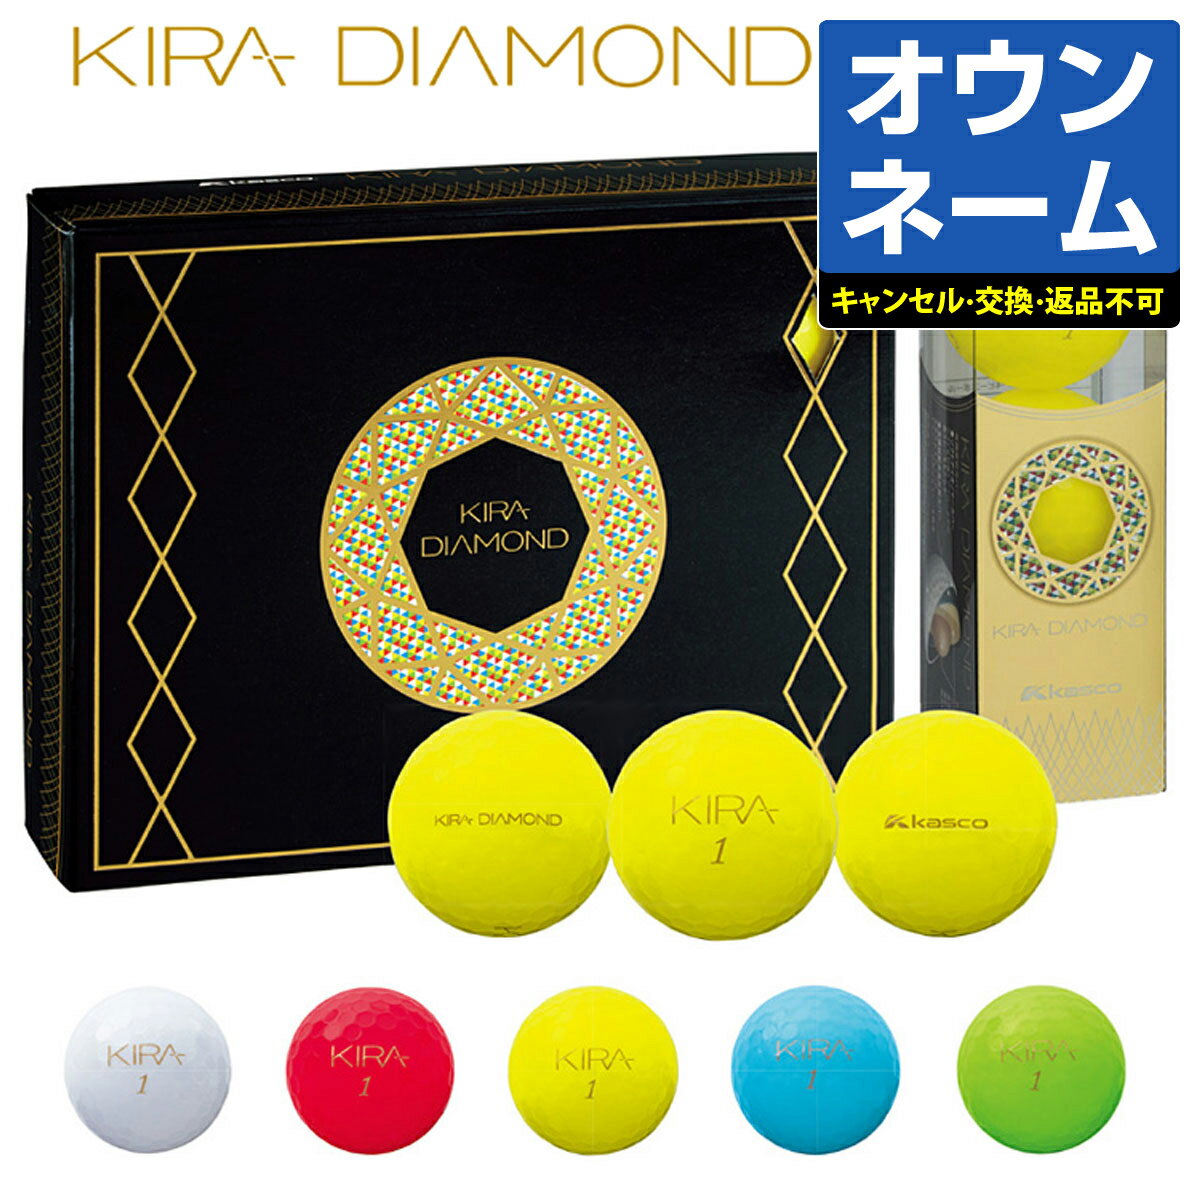  Kasco キャスコ 正規品 KIRA DIAMOND キラダイヤモンド ゴルフボール 1ダース(12個入)